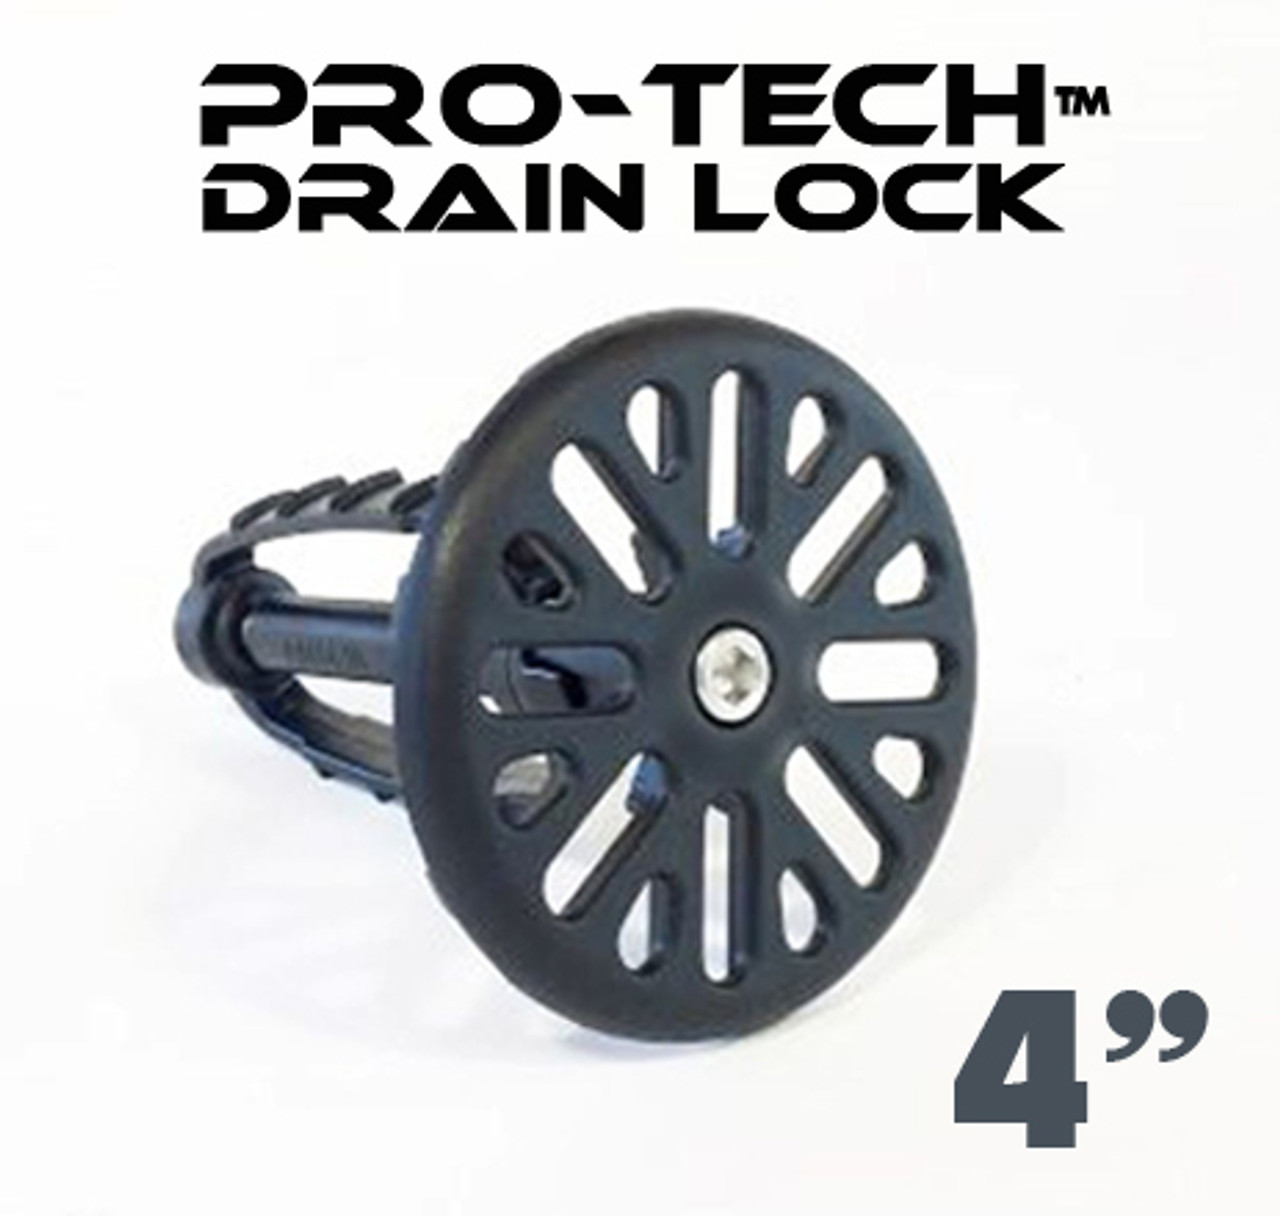 Pro-Tech Drain Lock Flat 4"